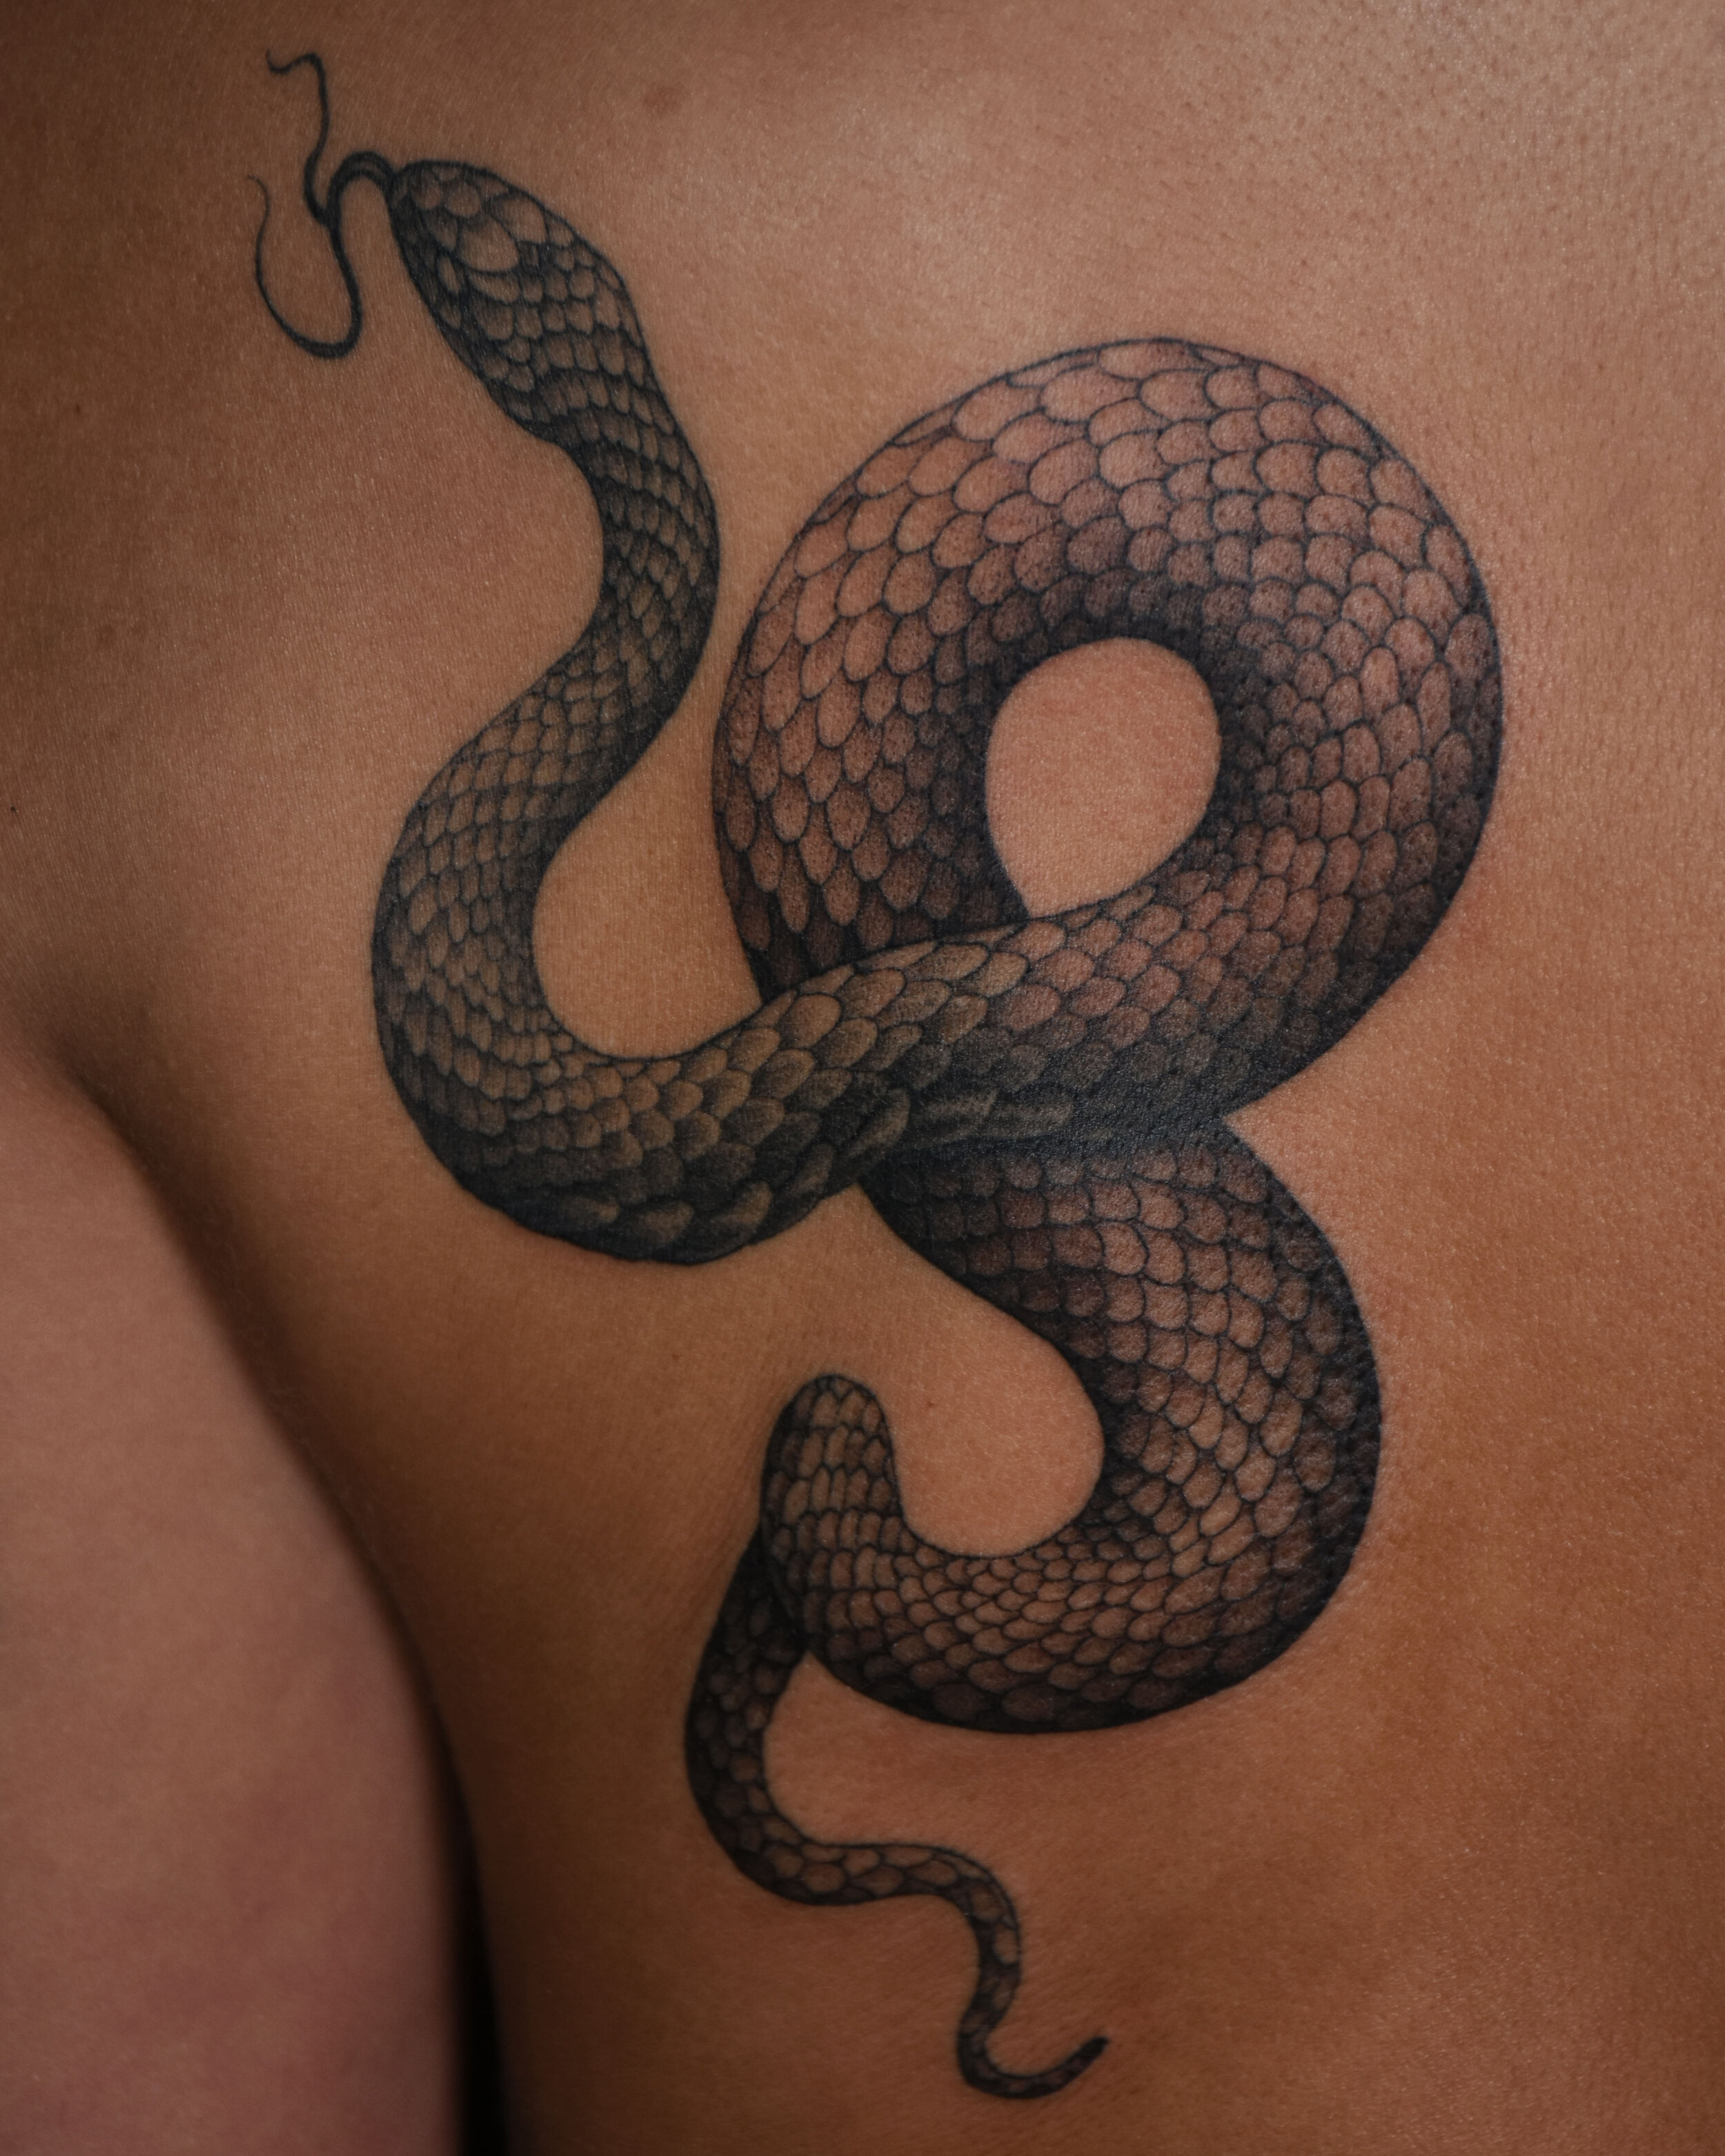 Blackwork snake tattoo by Katt